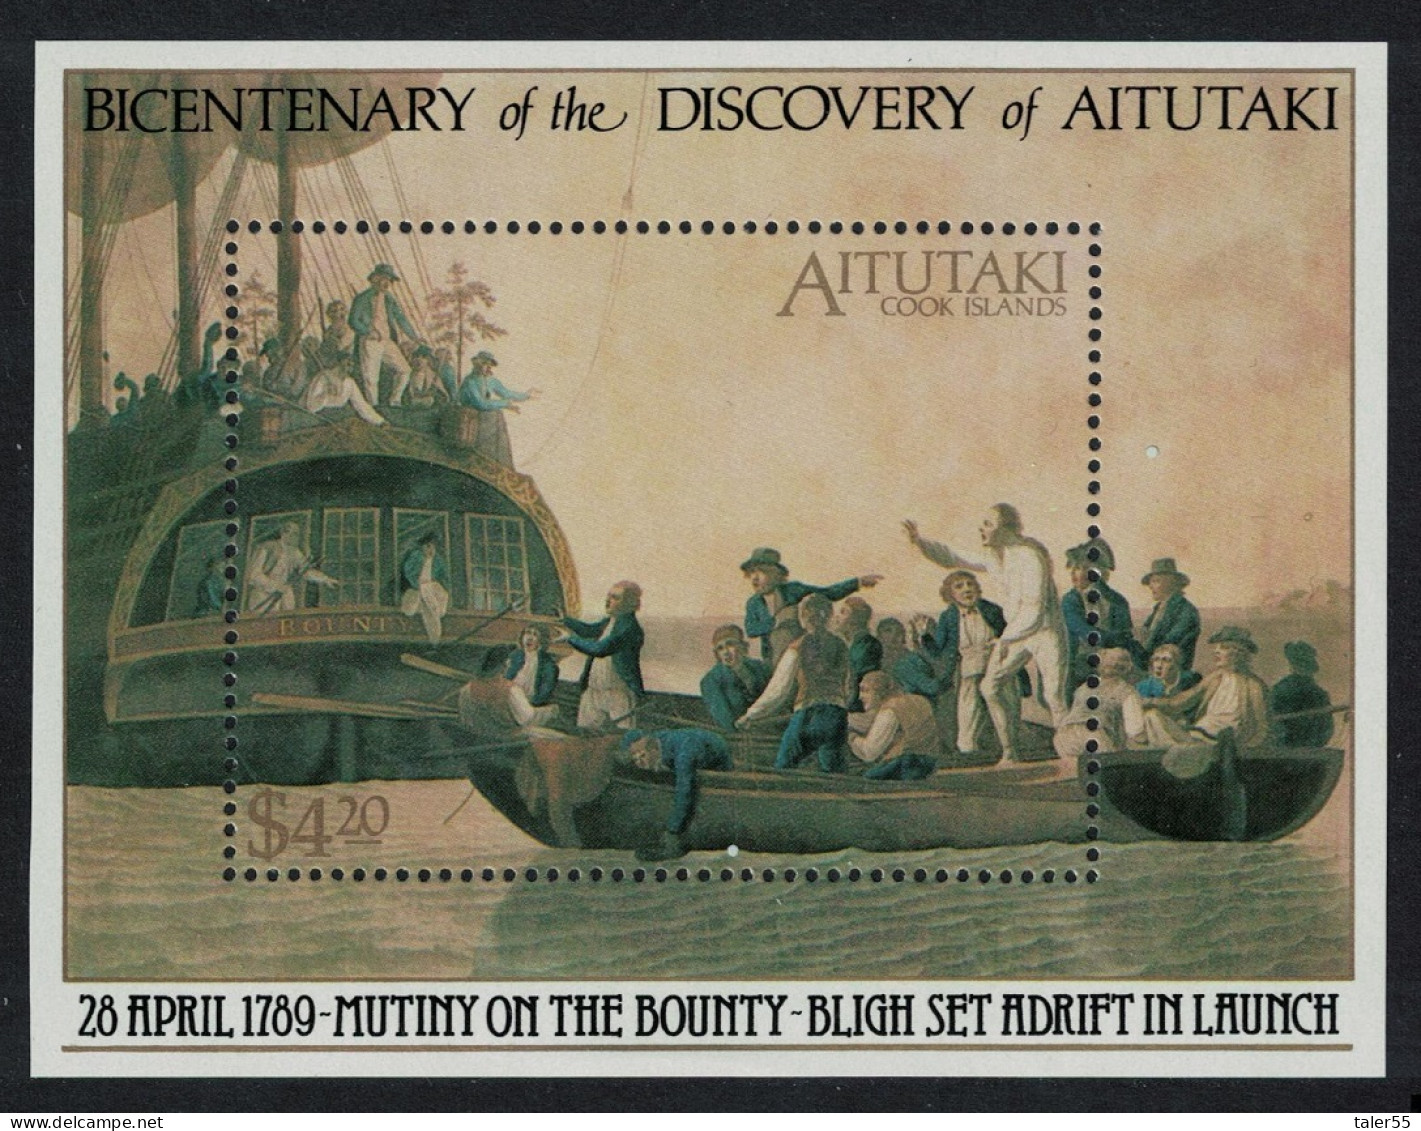 Aitutaki Bicentenary Of Discovery By Captain Bligh MS 1989 MNH SG#MS601 - Aitutaki